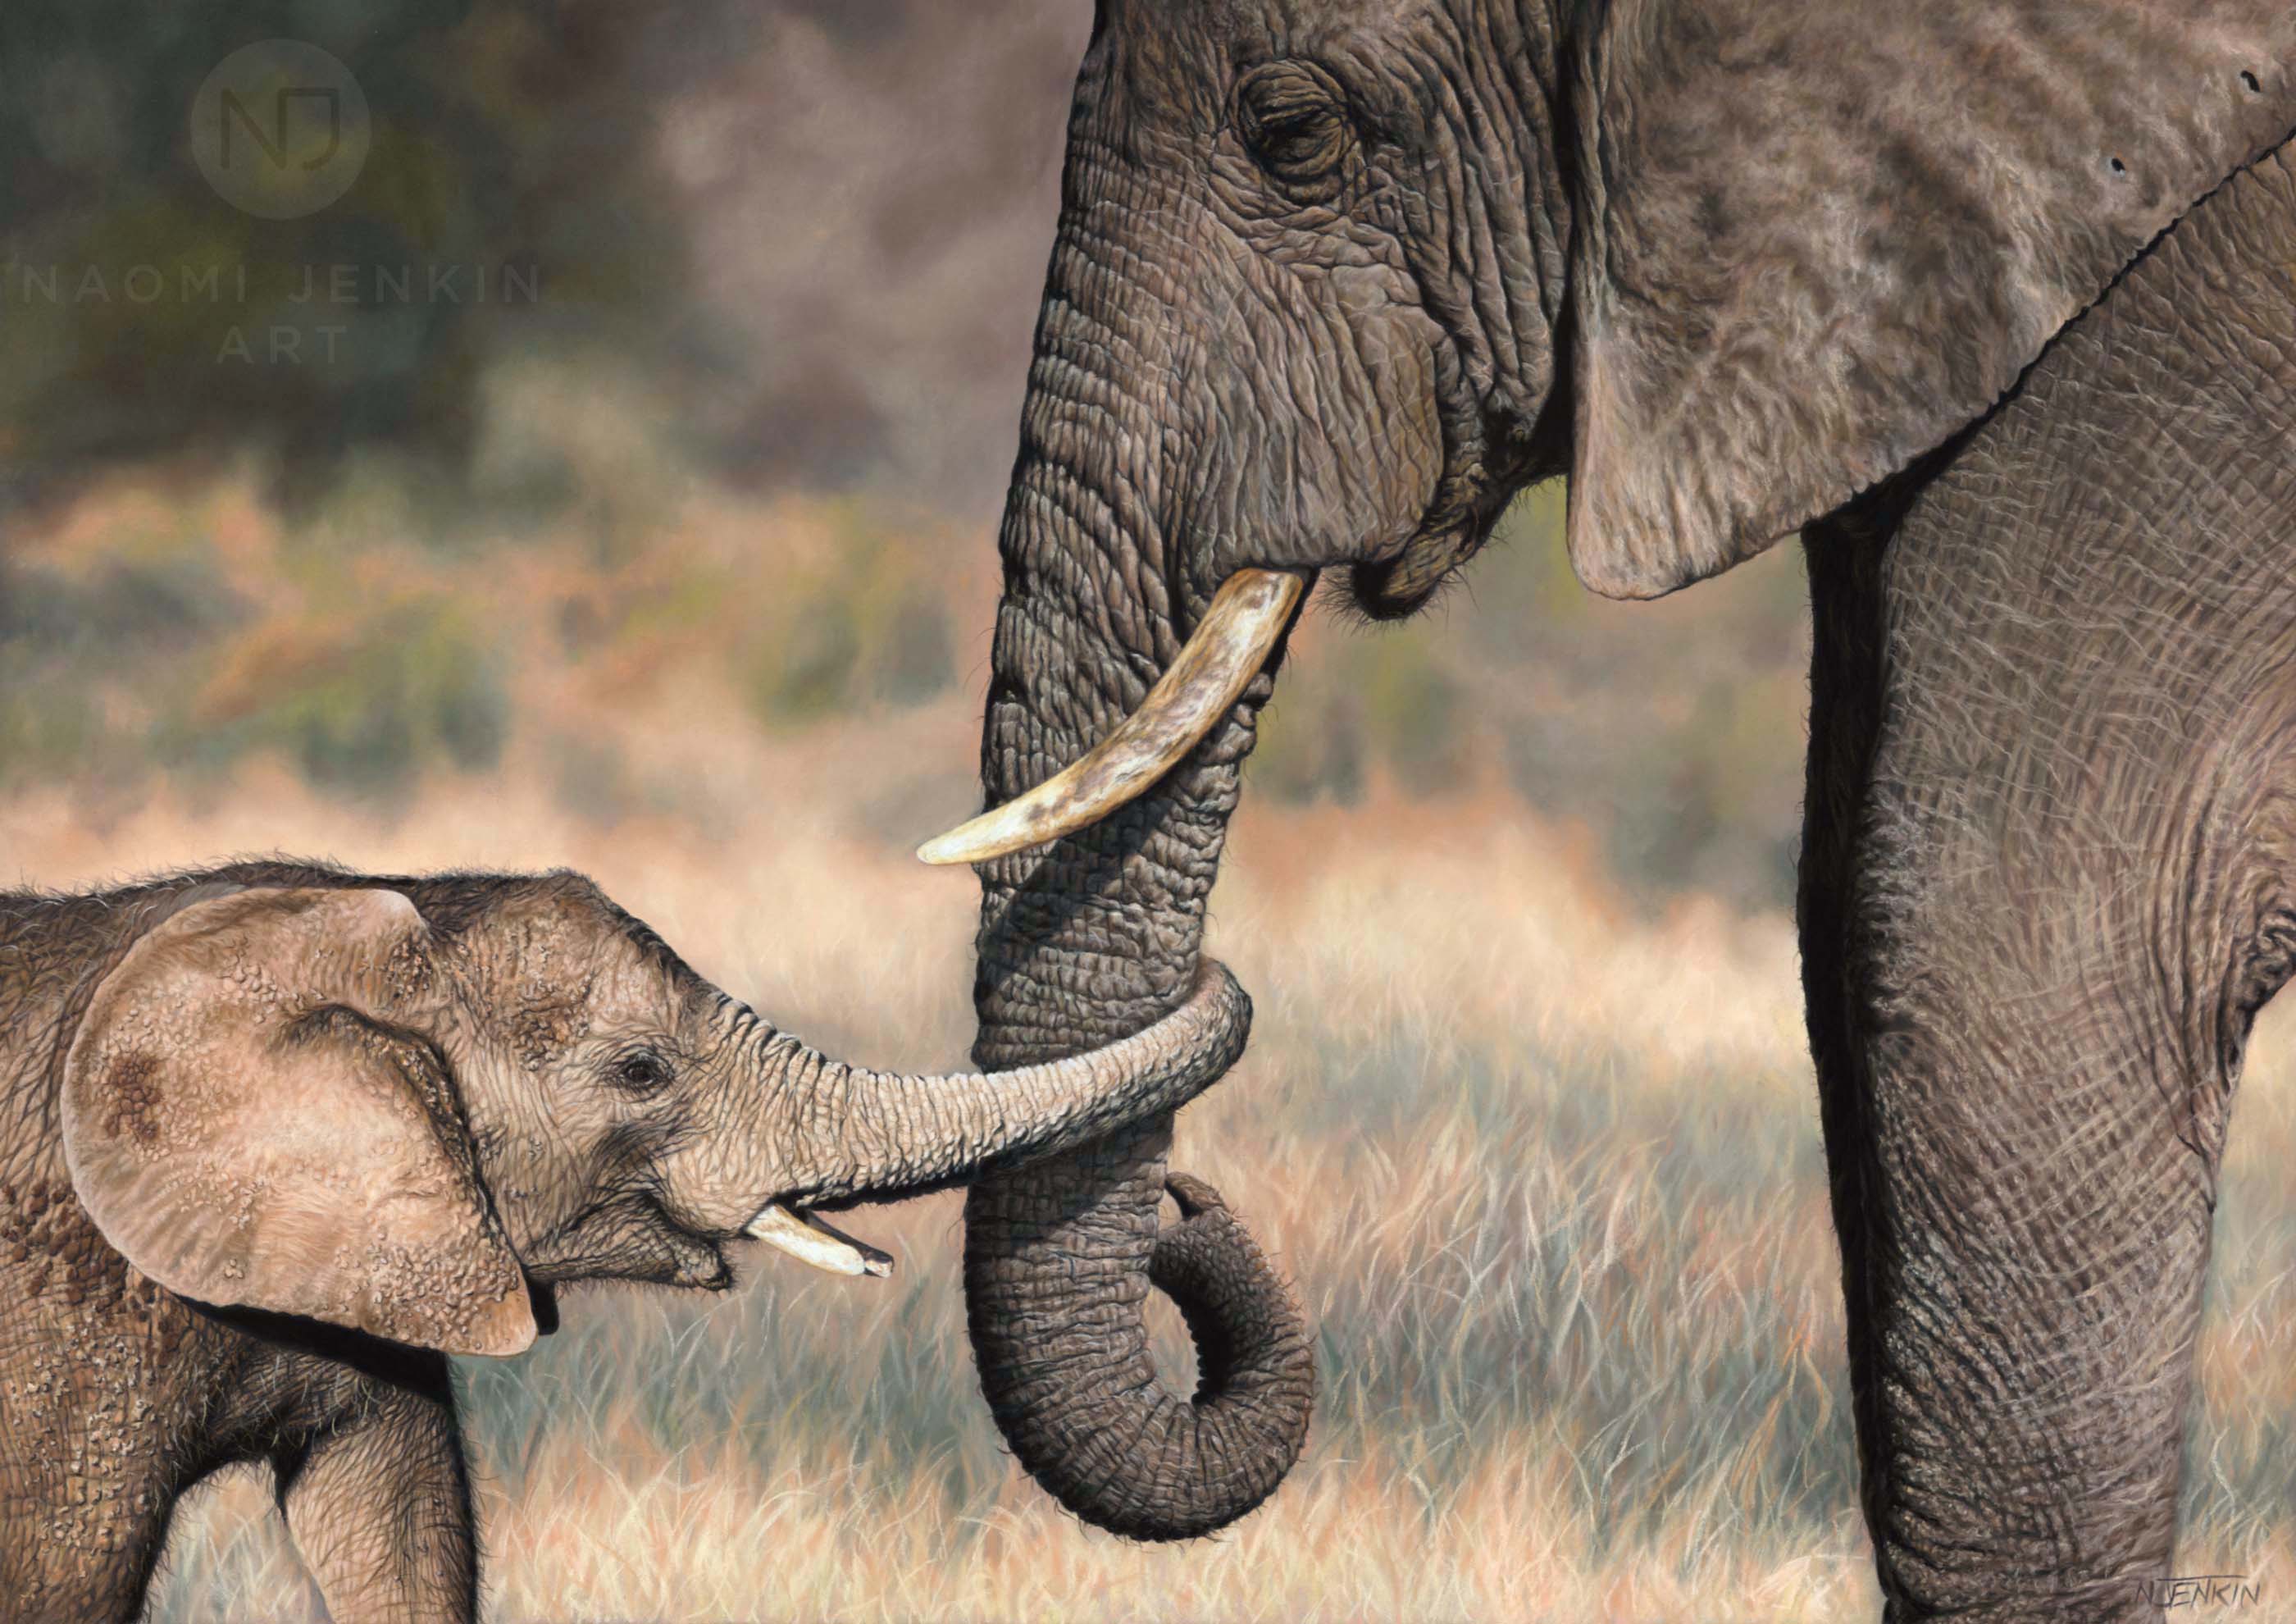 African elephant painting by wildlife artist Naomi Jenkin.